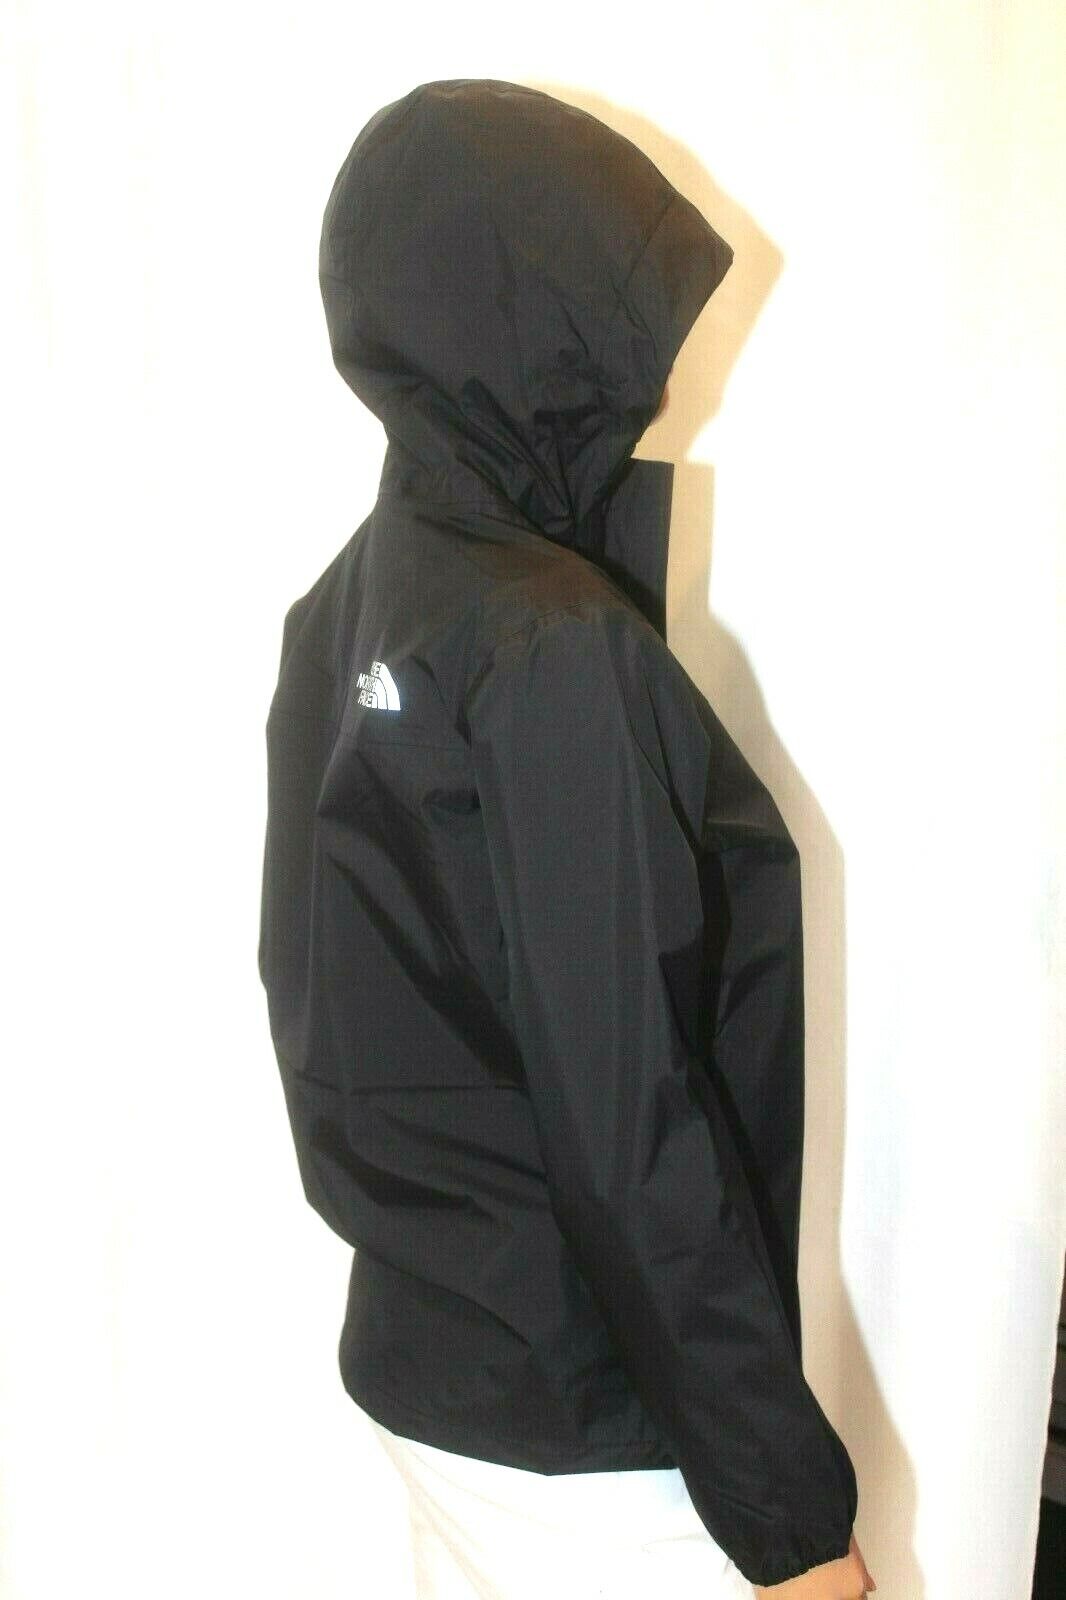 *NWT* $70. North Face Resolve Reflective Girls Black Rain Jacket HyVent Hood -LG